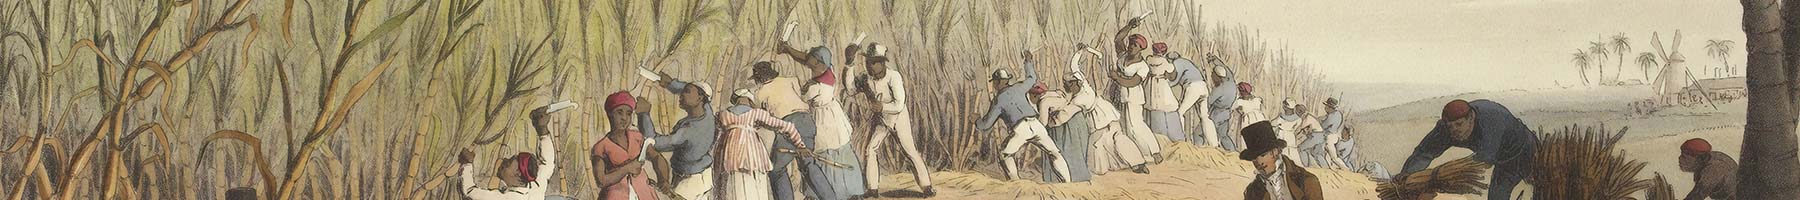 illustration of slaves working in a sugarcane plantation